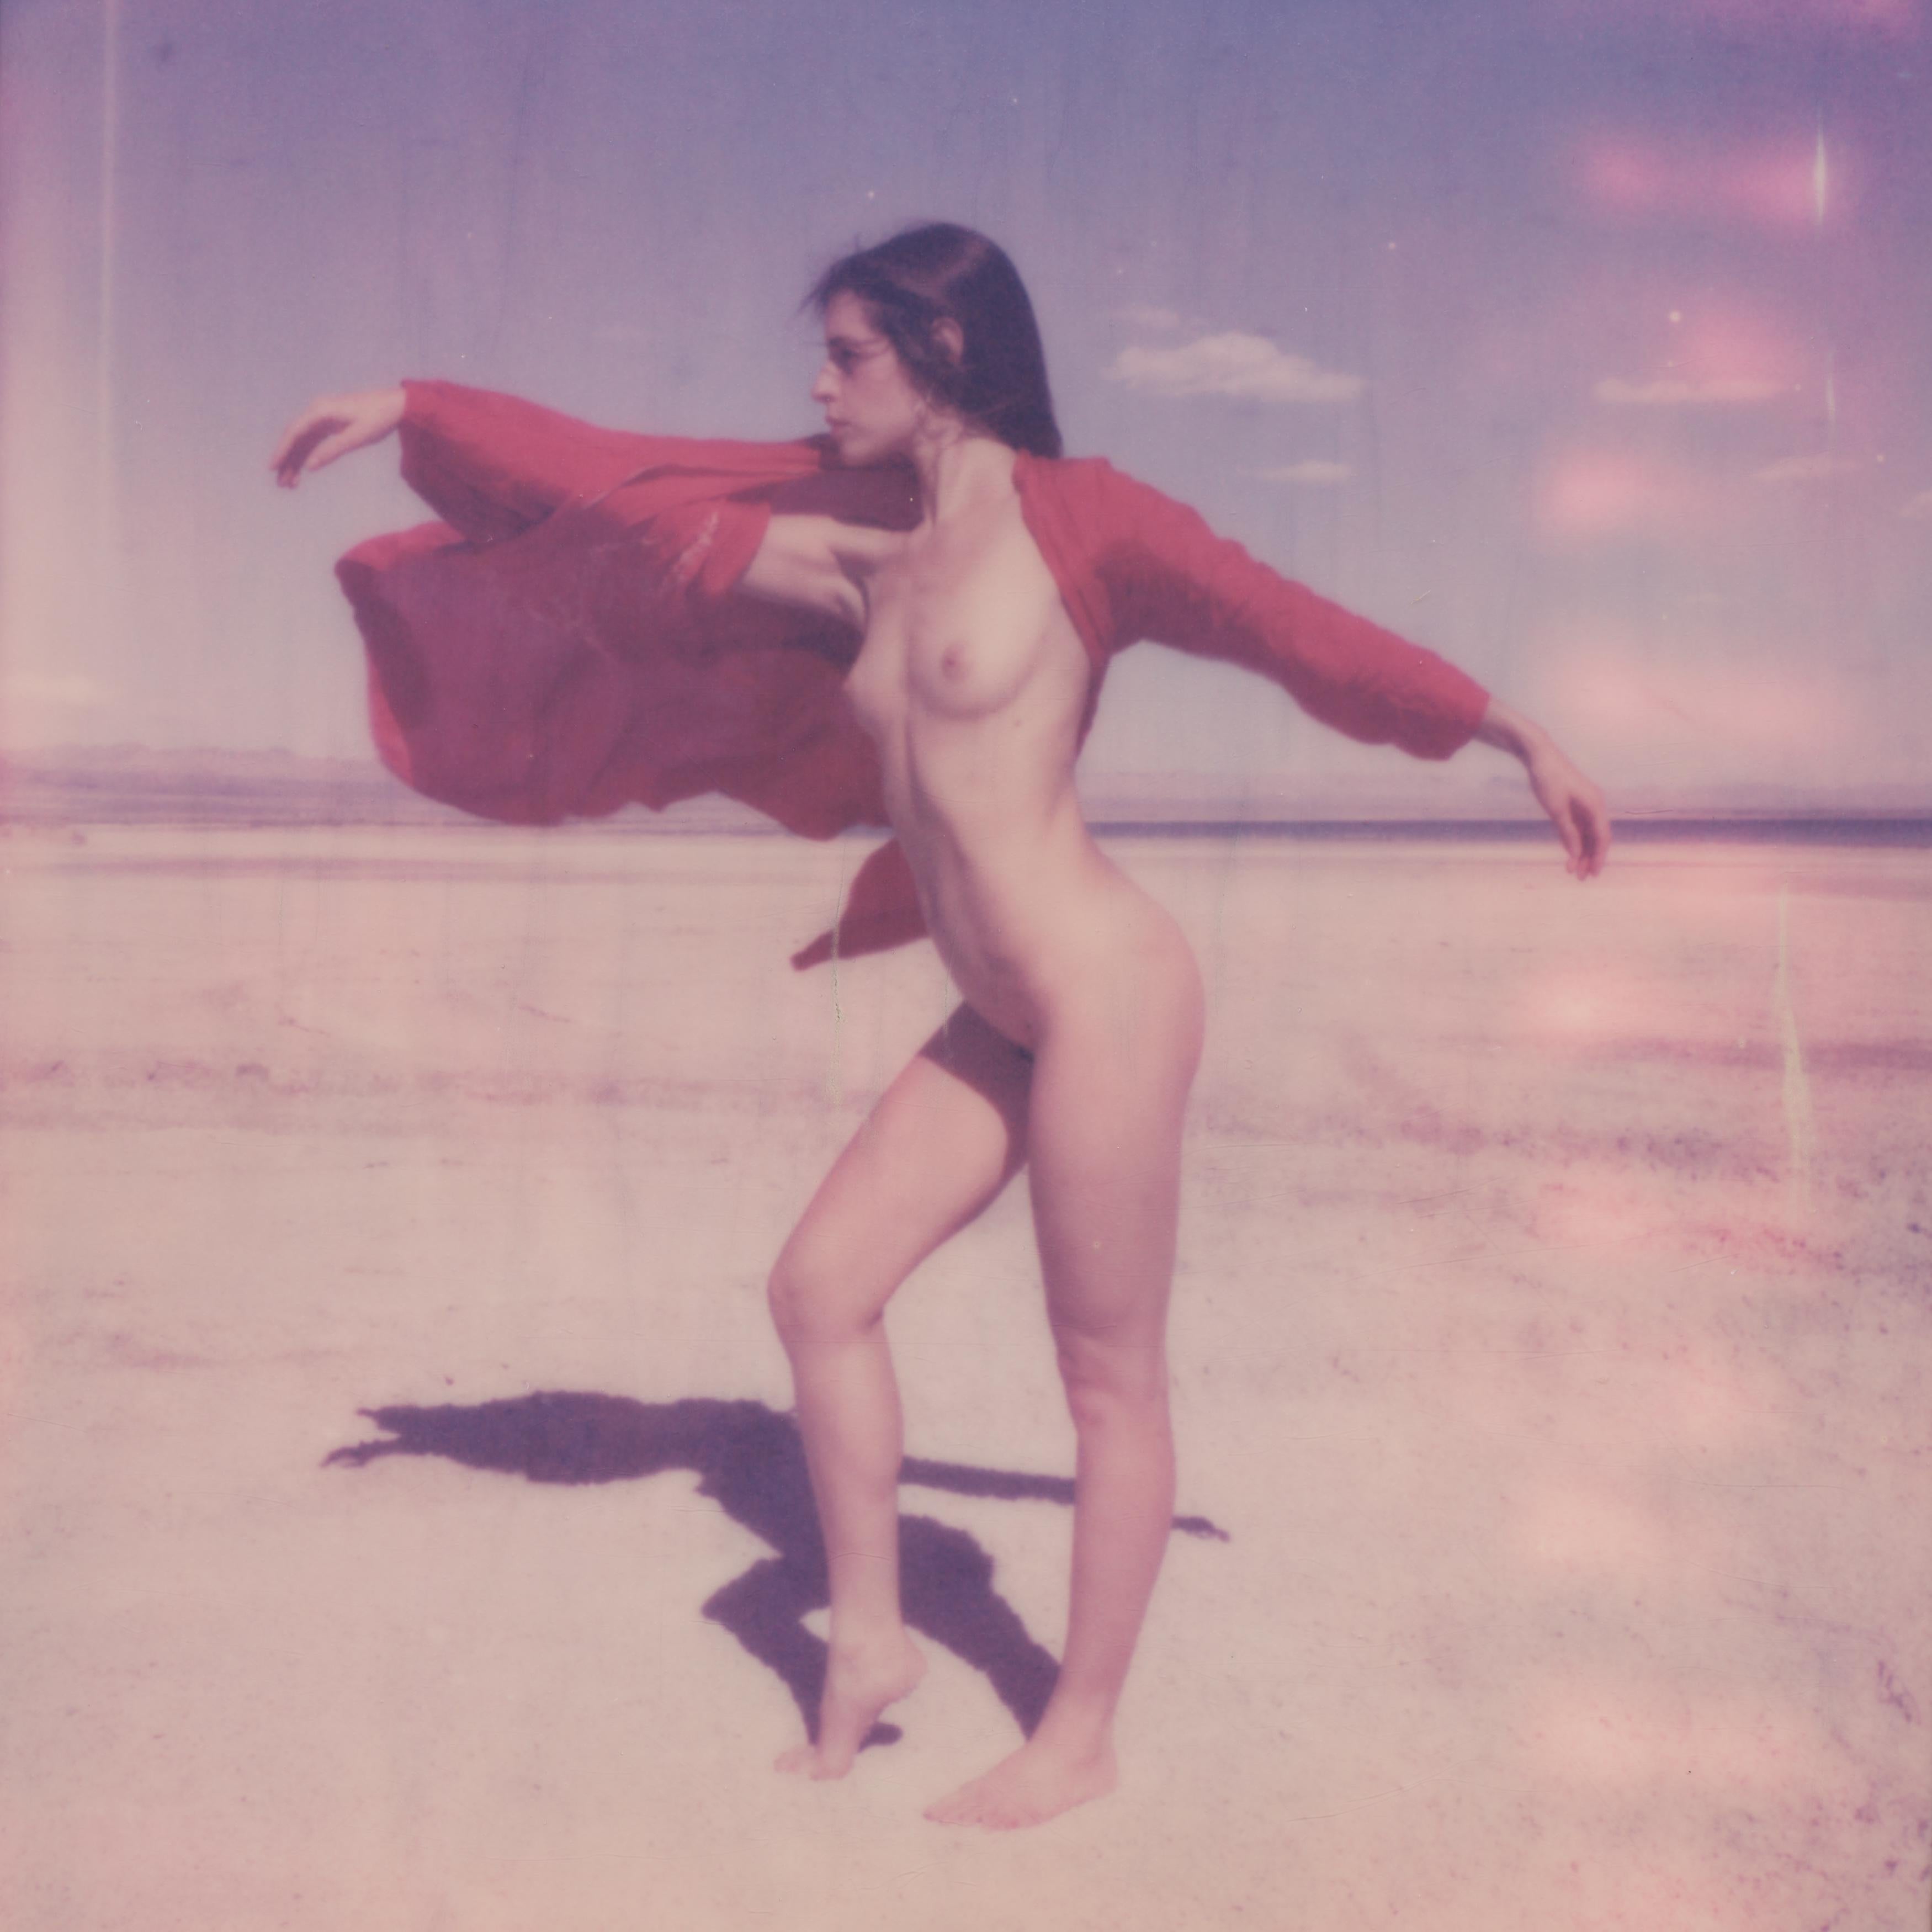 Kirsten Thys van den Audenaerde Nude Photograph - Fly (Bombay Beach) - Contemporary, Polaroid, Color, Women, 21st Century